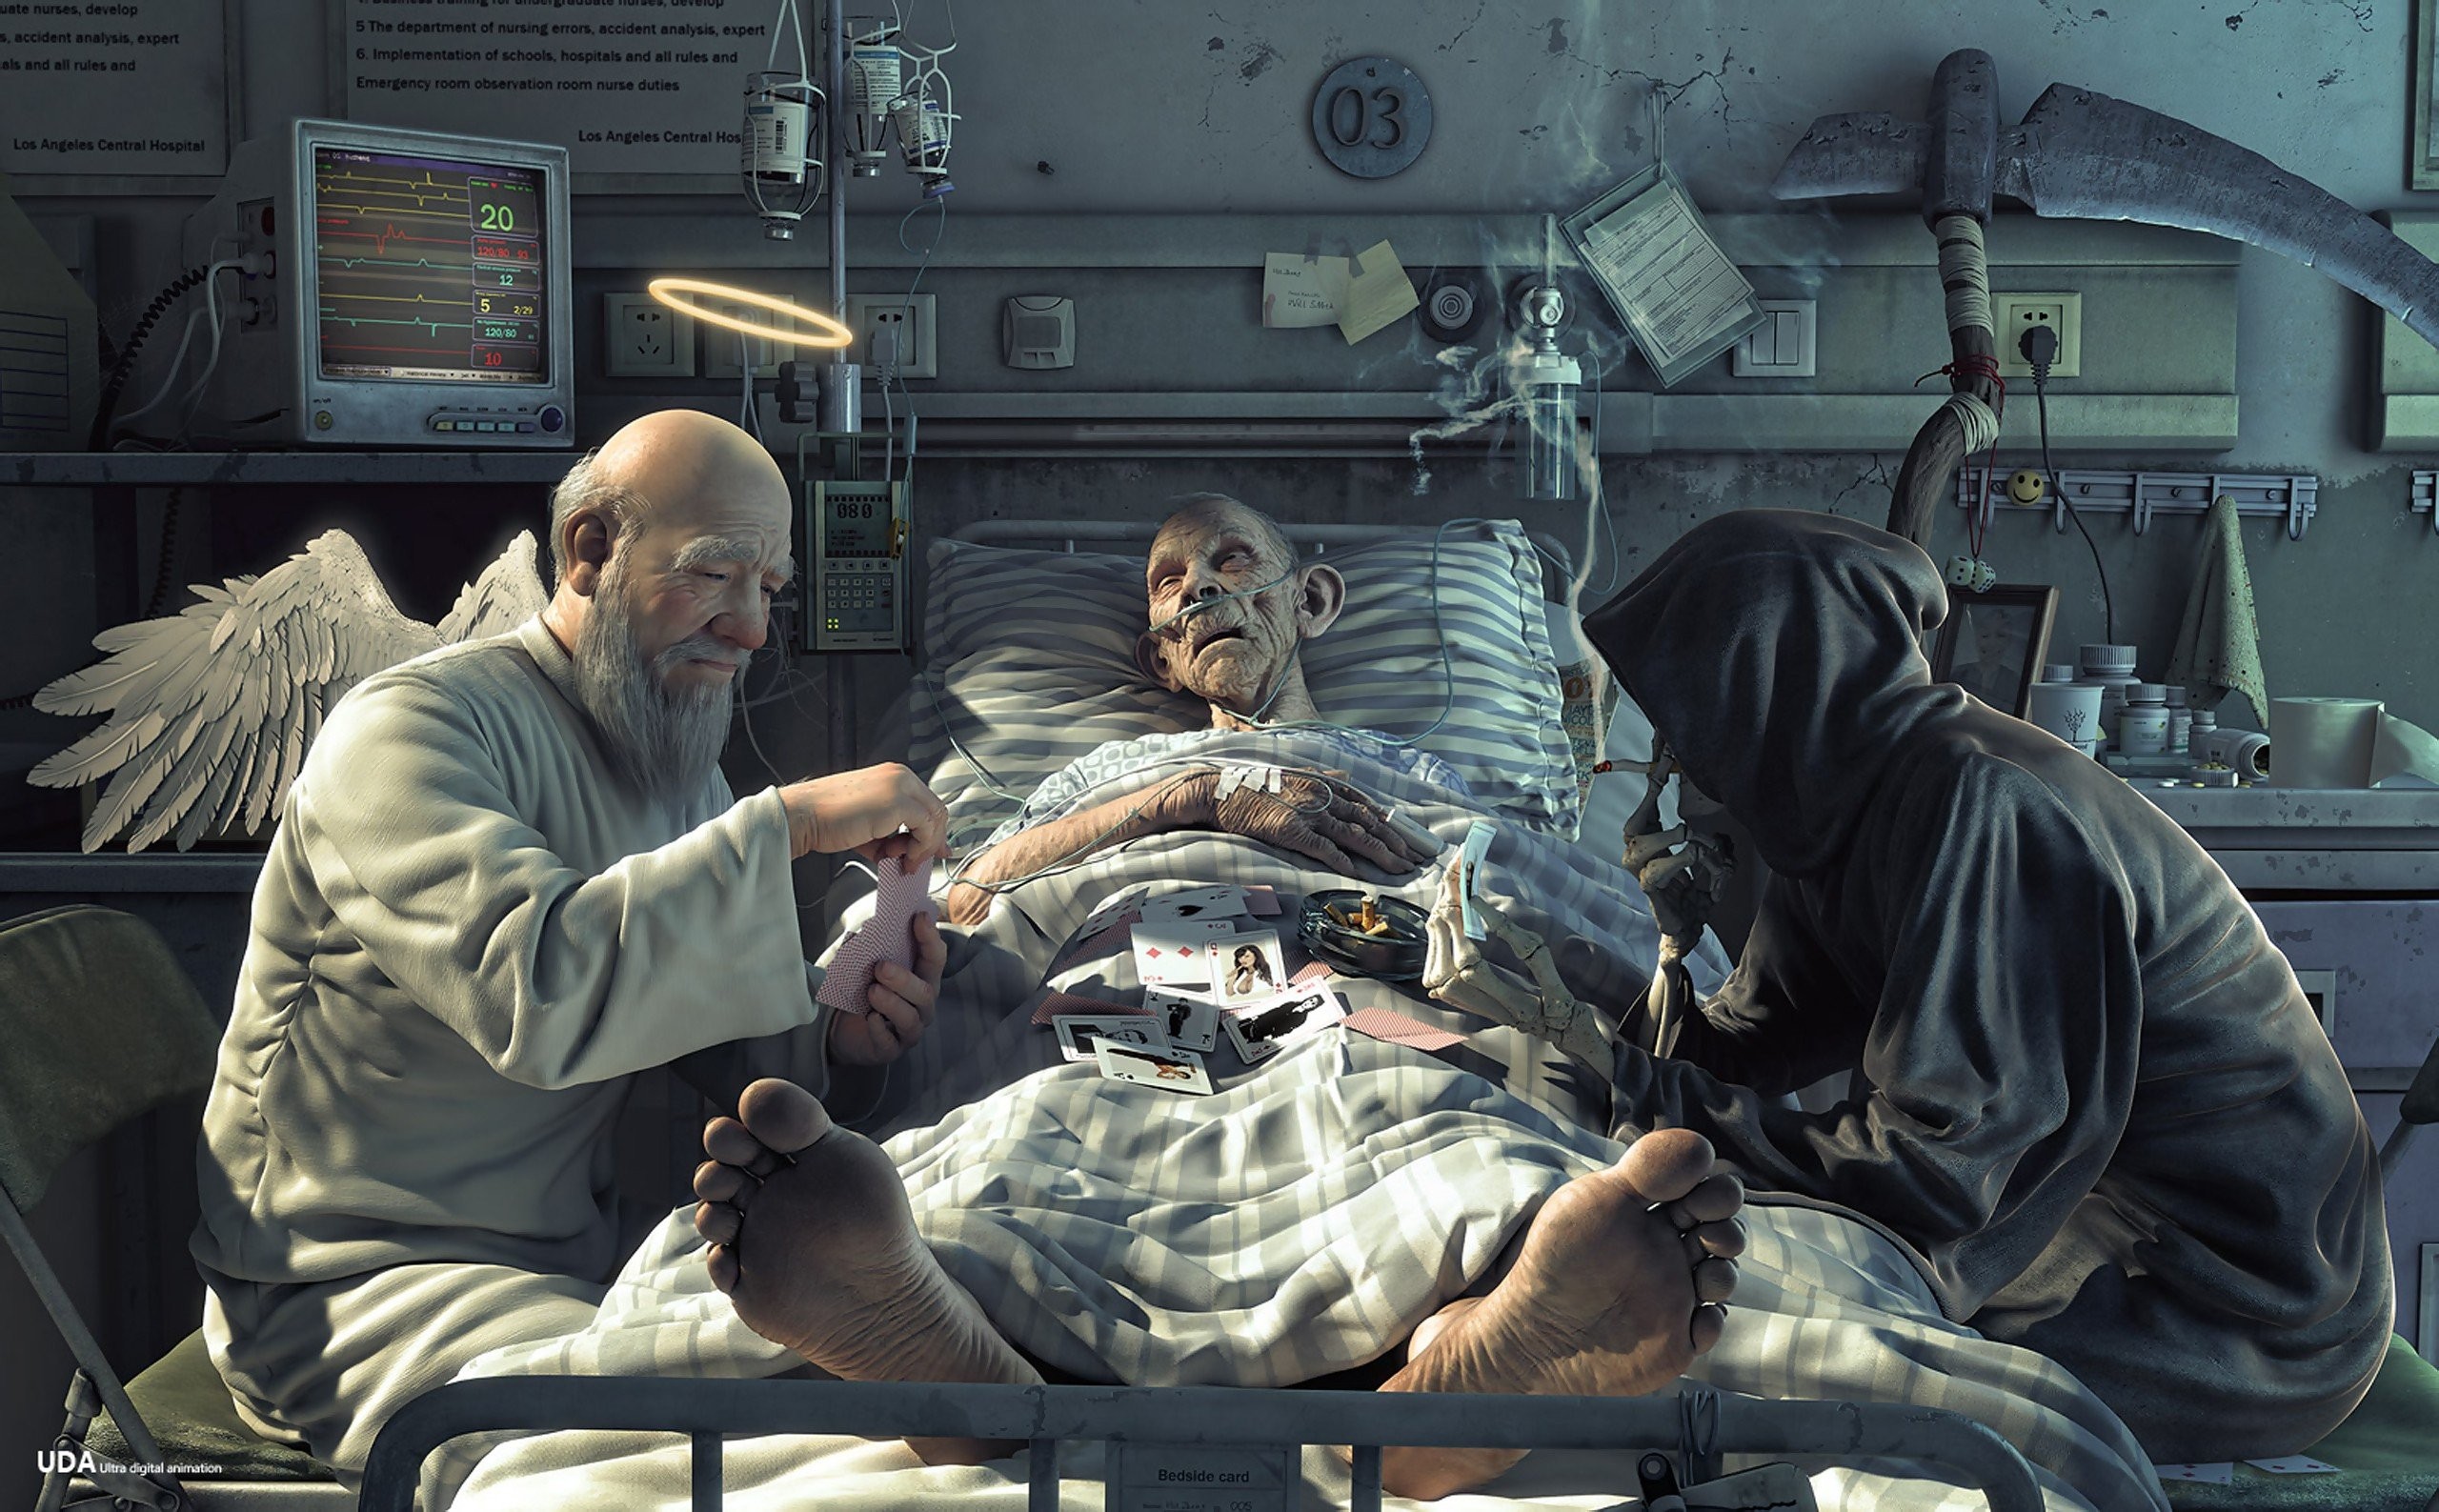 General 2560x1587 medicine hospital death Grim Reaper digital art angel dark humor fantasy art playing cards